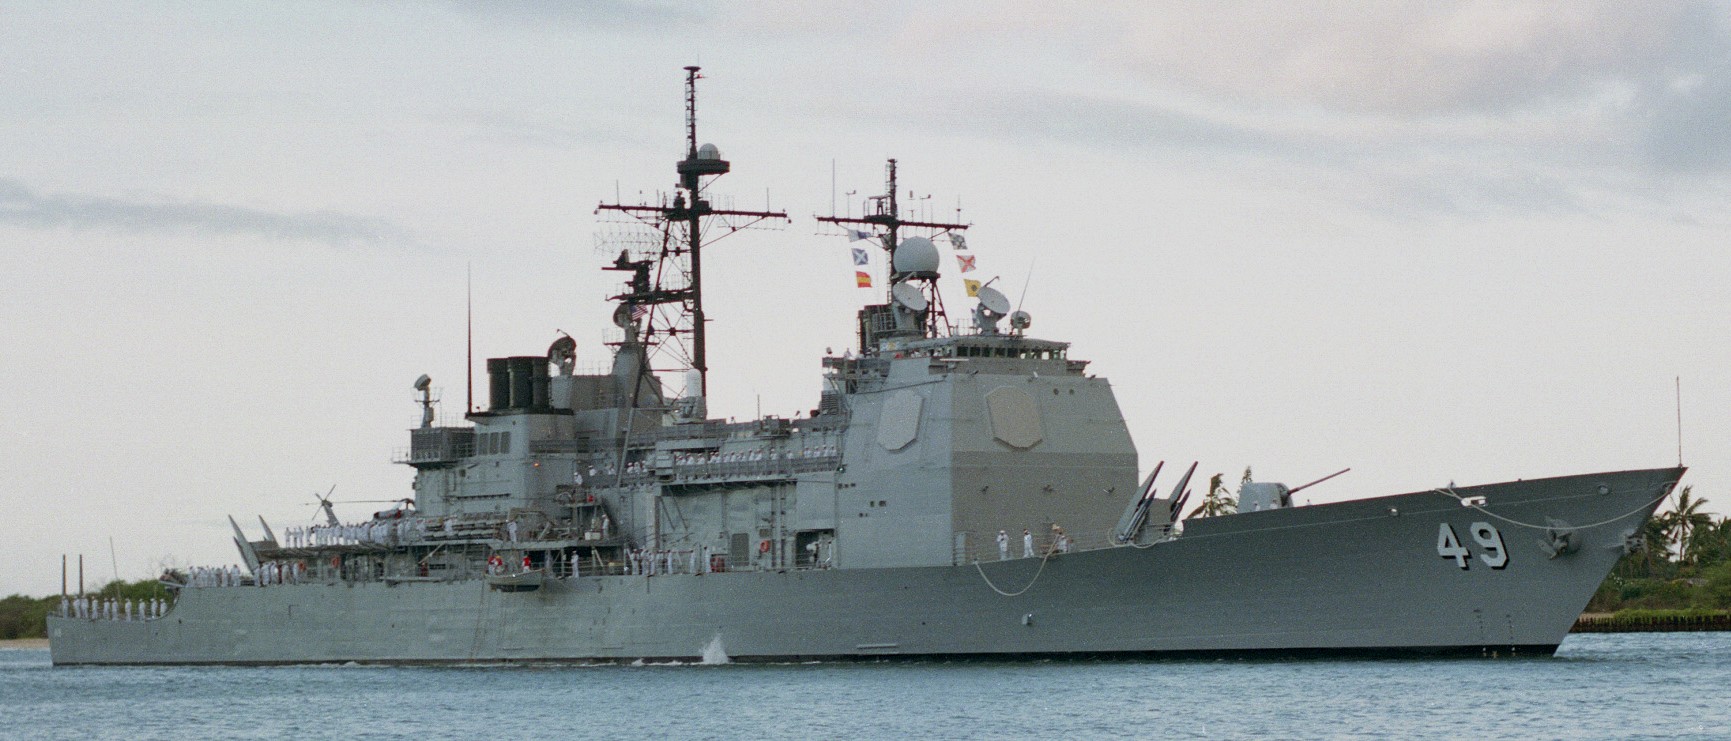 cg-49 uss vincennes ticonderoga class guided missile cruiser aegis us navy rimpac hawaii 1986